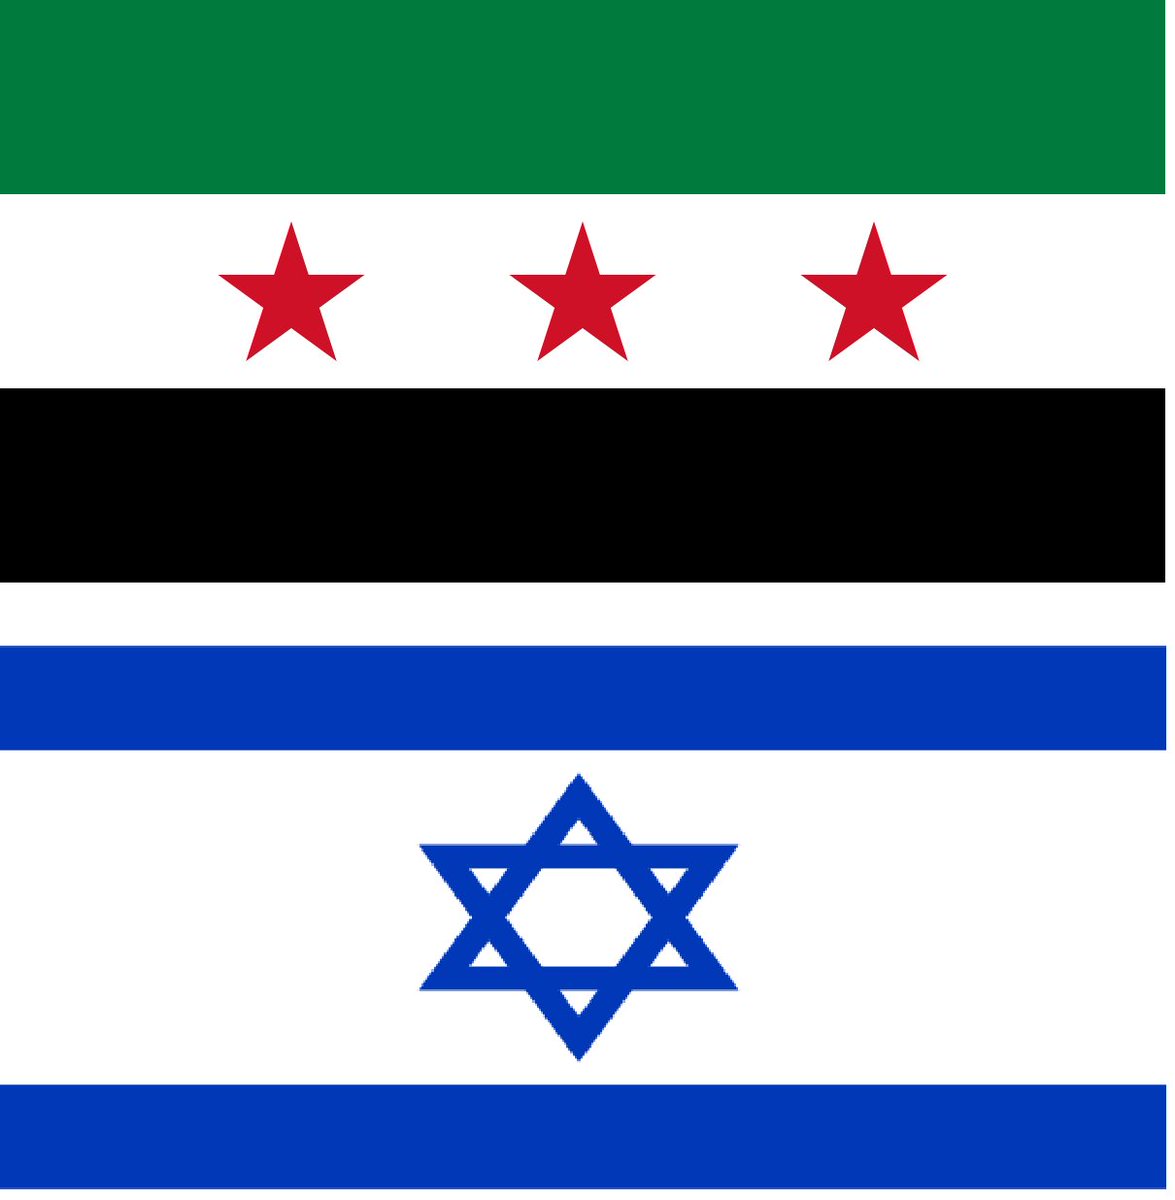 I stand with #Israel 🇮🇱 against the Islamic Republic in #Iran

#FreeSyria #SlavaUkraini #LongliveIsrael